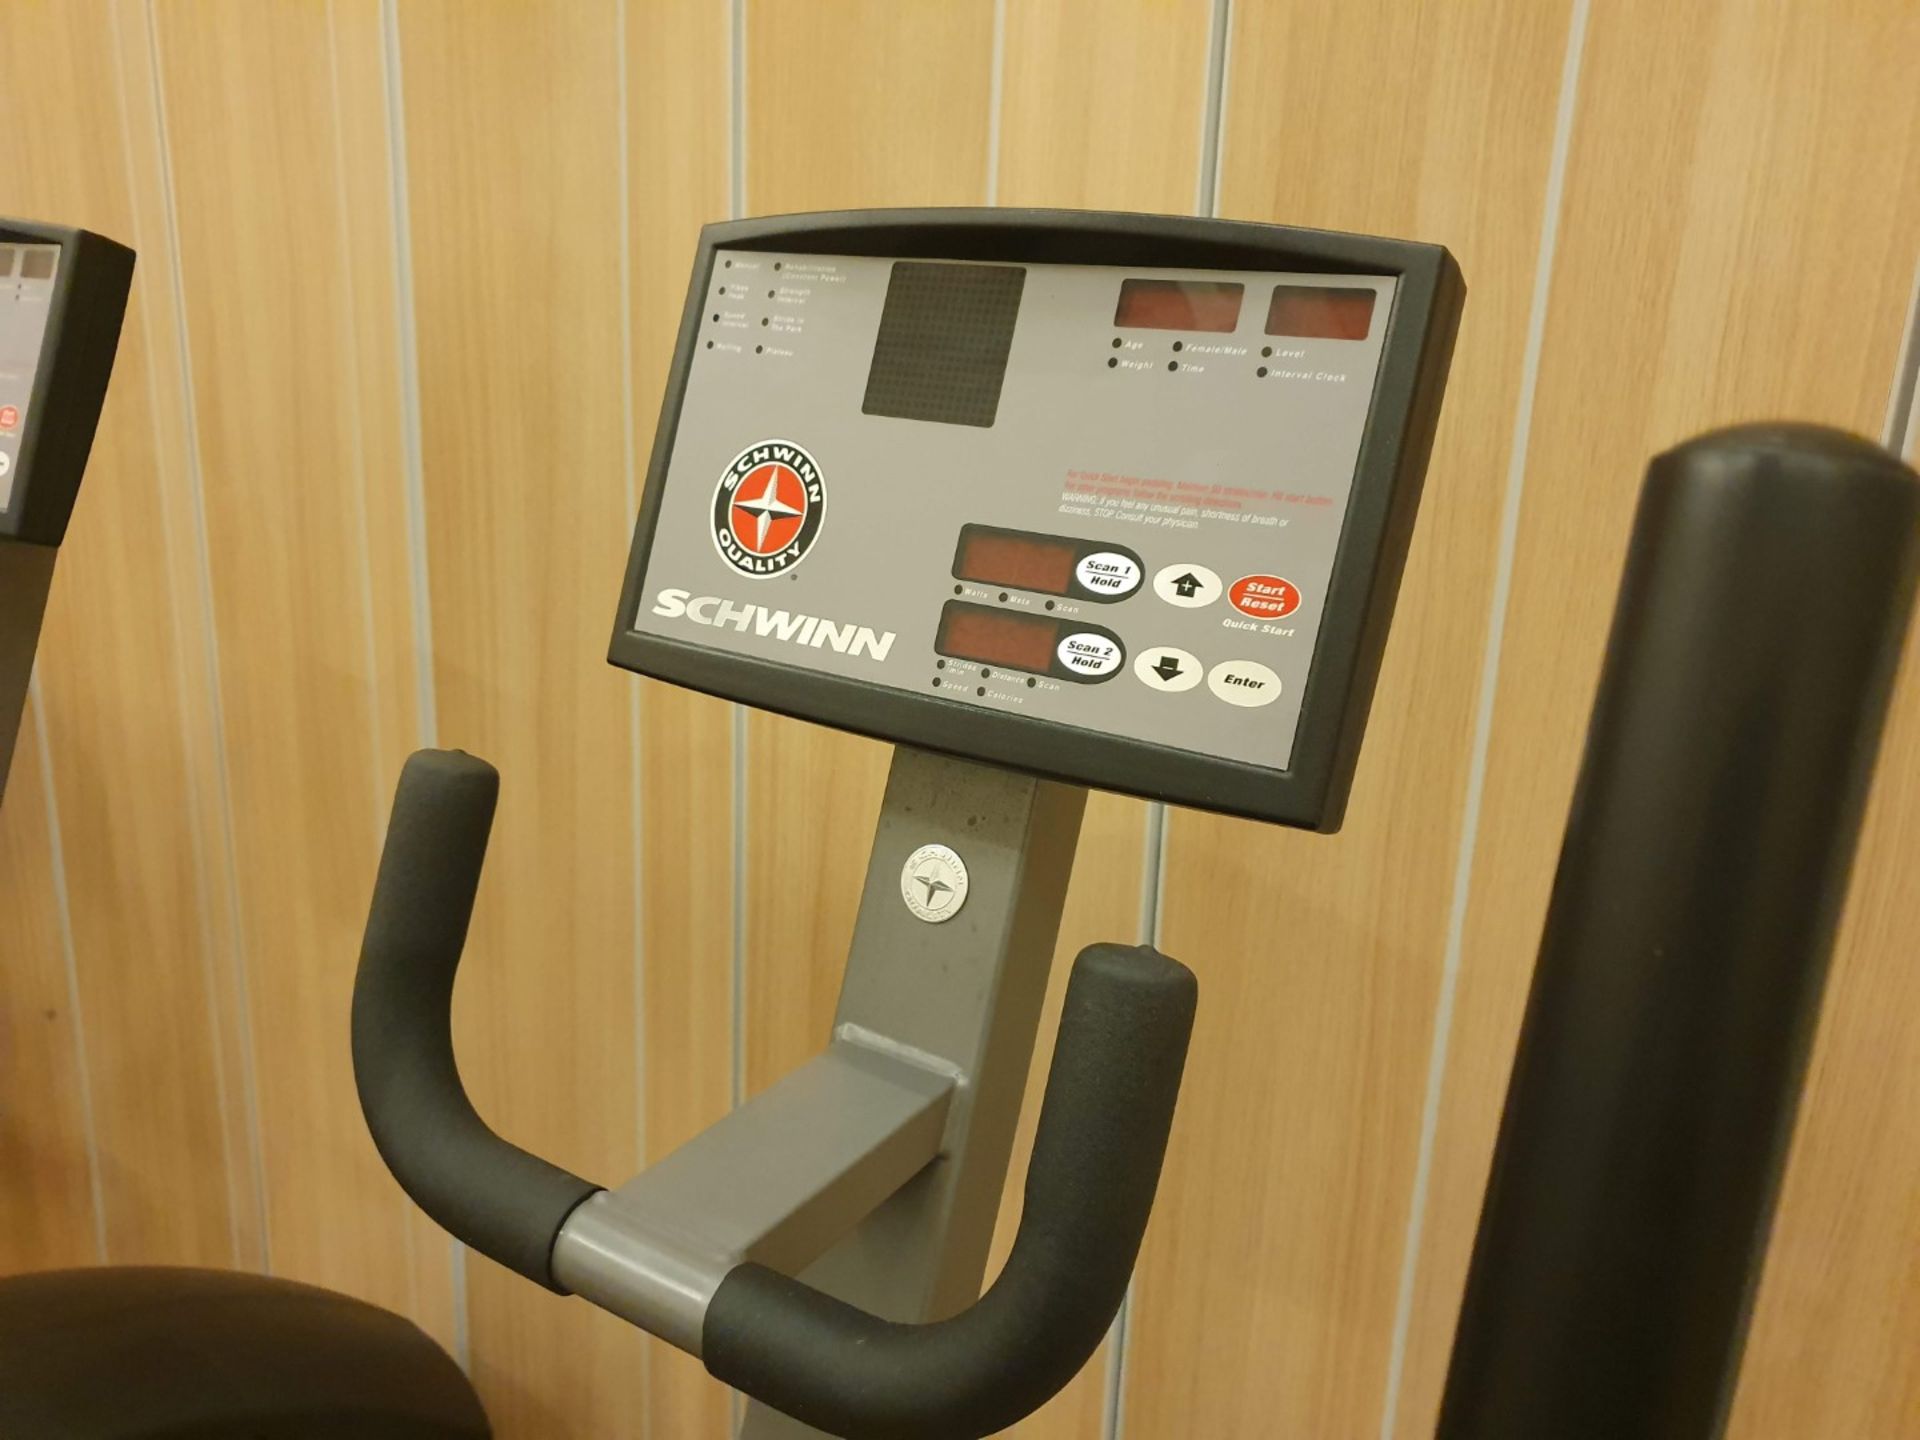 1 x Schwinn Elliptical Cross Trainer Gym Machine - Model 410i - CL552 - Location: West Yorkshire - Image 4 of 8